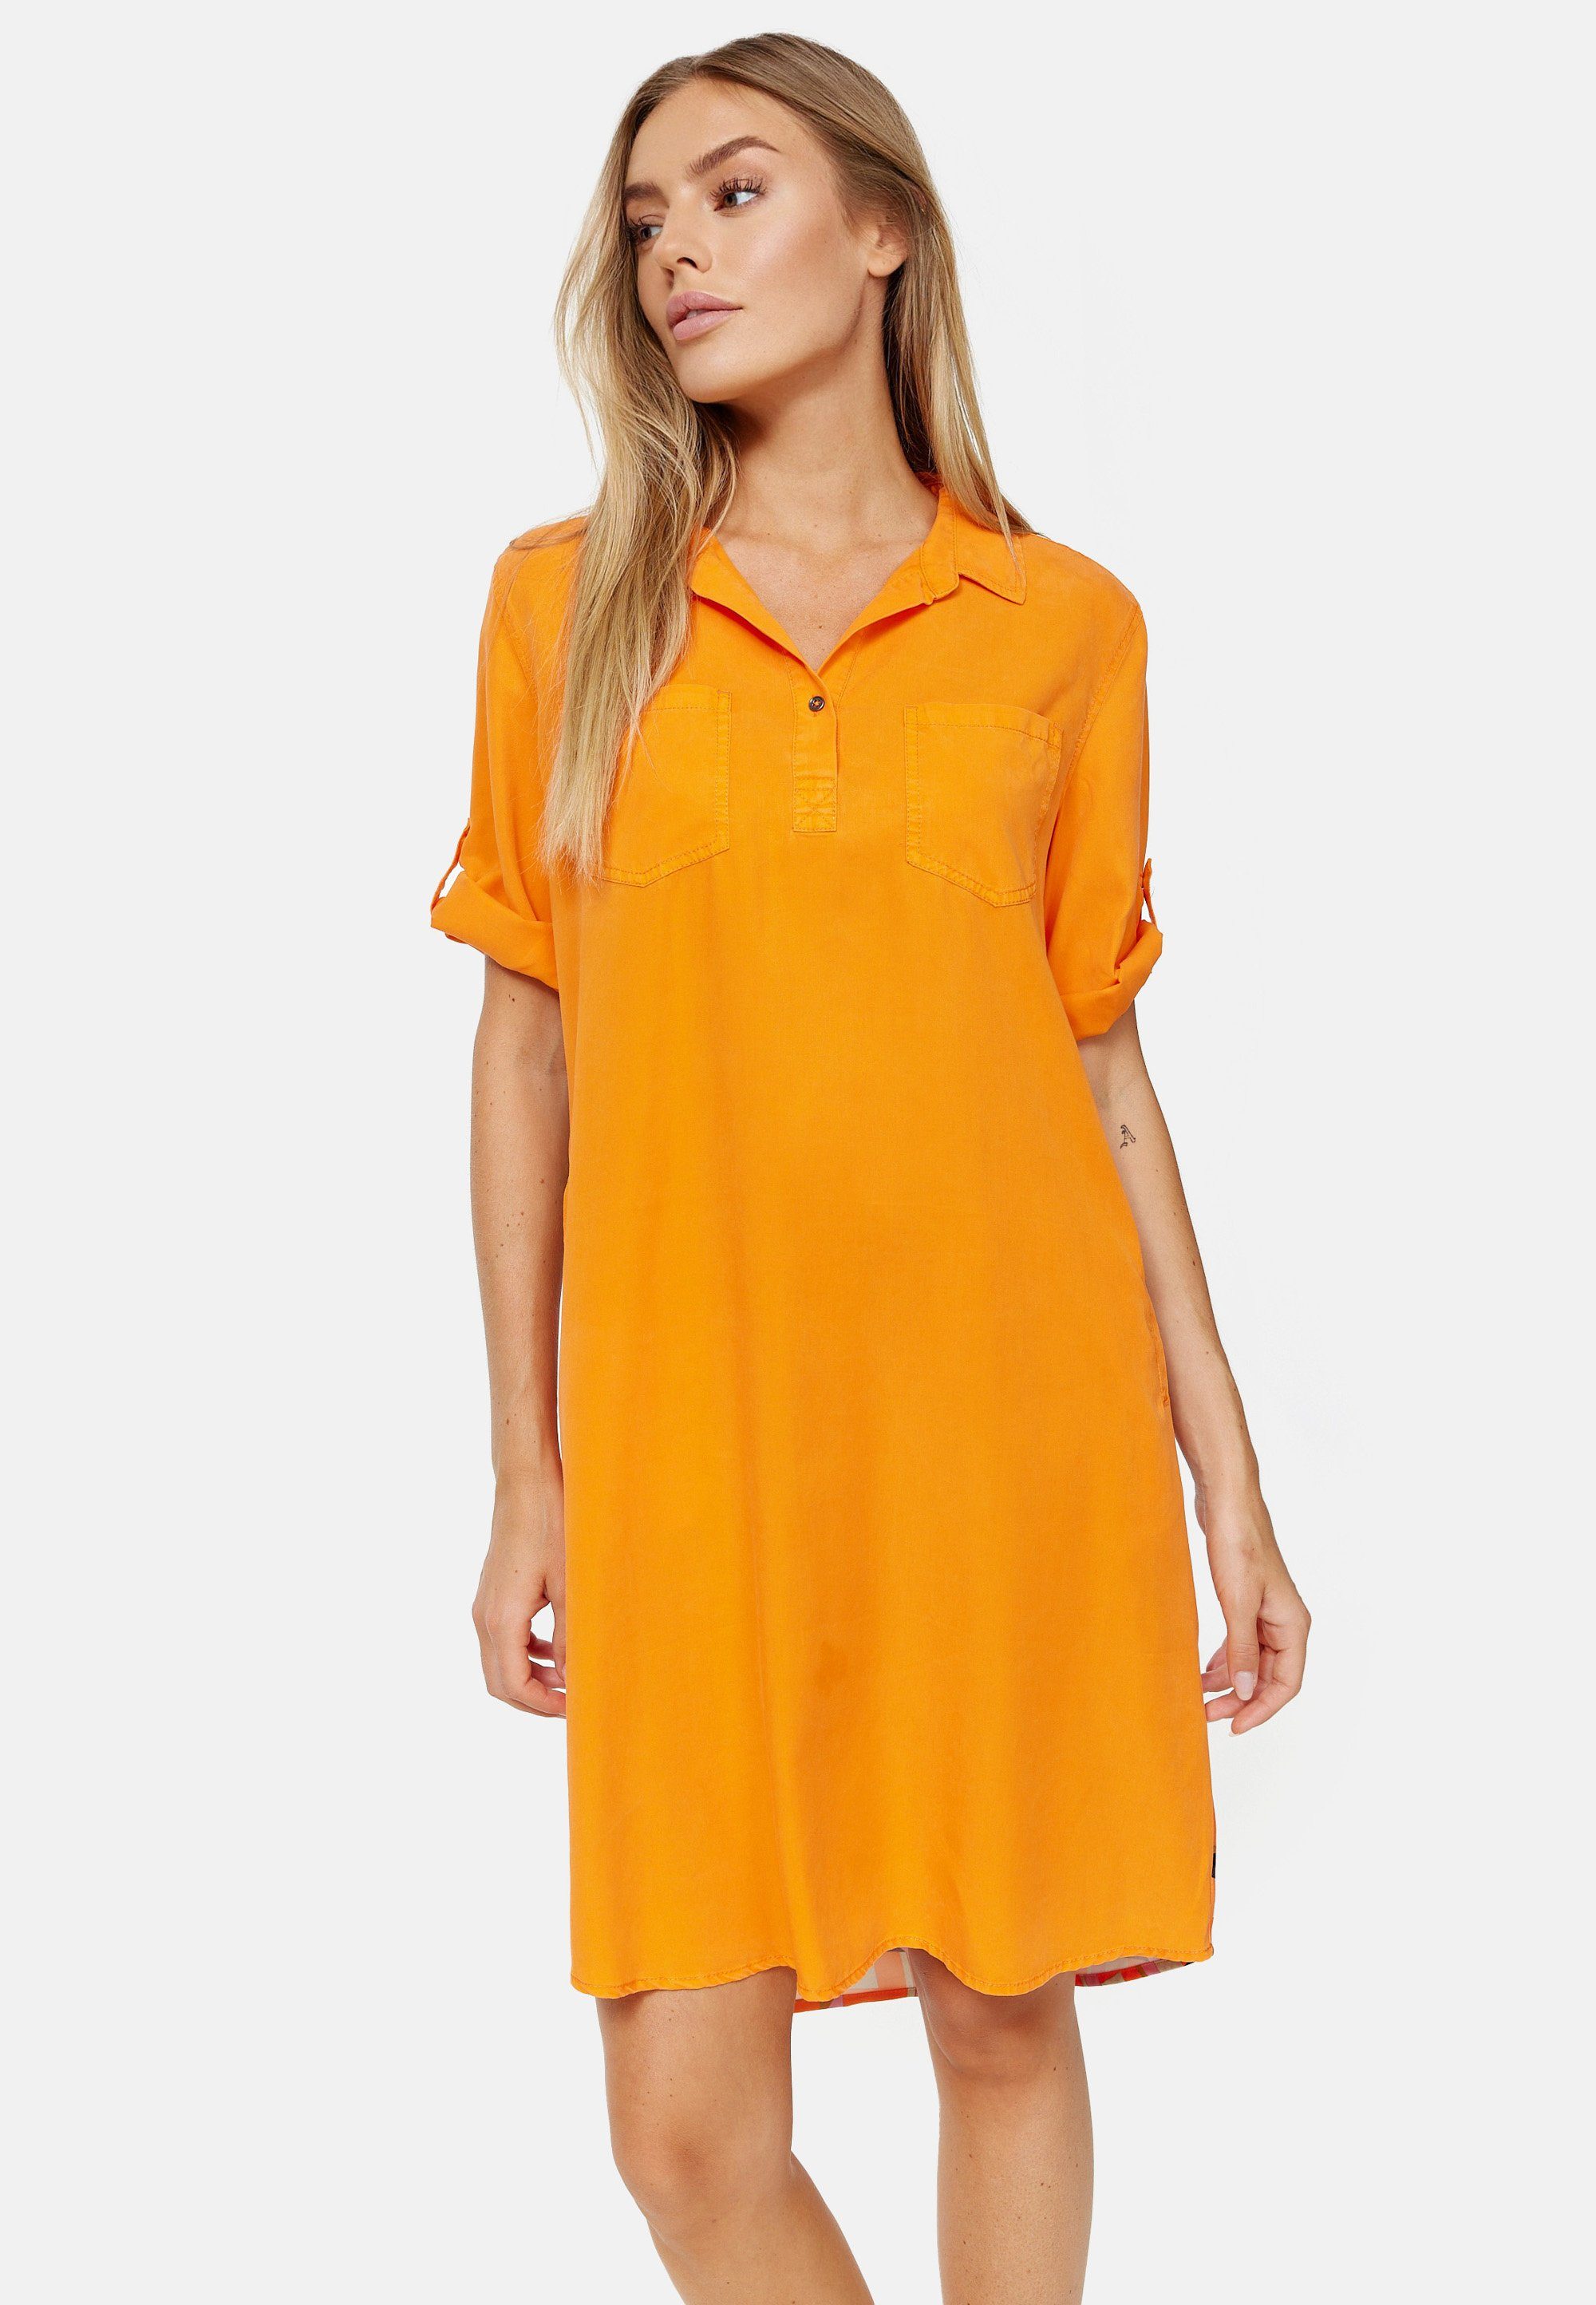 CATNOIR Blusenkleid Garment Dye Kleid 135